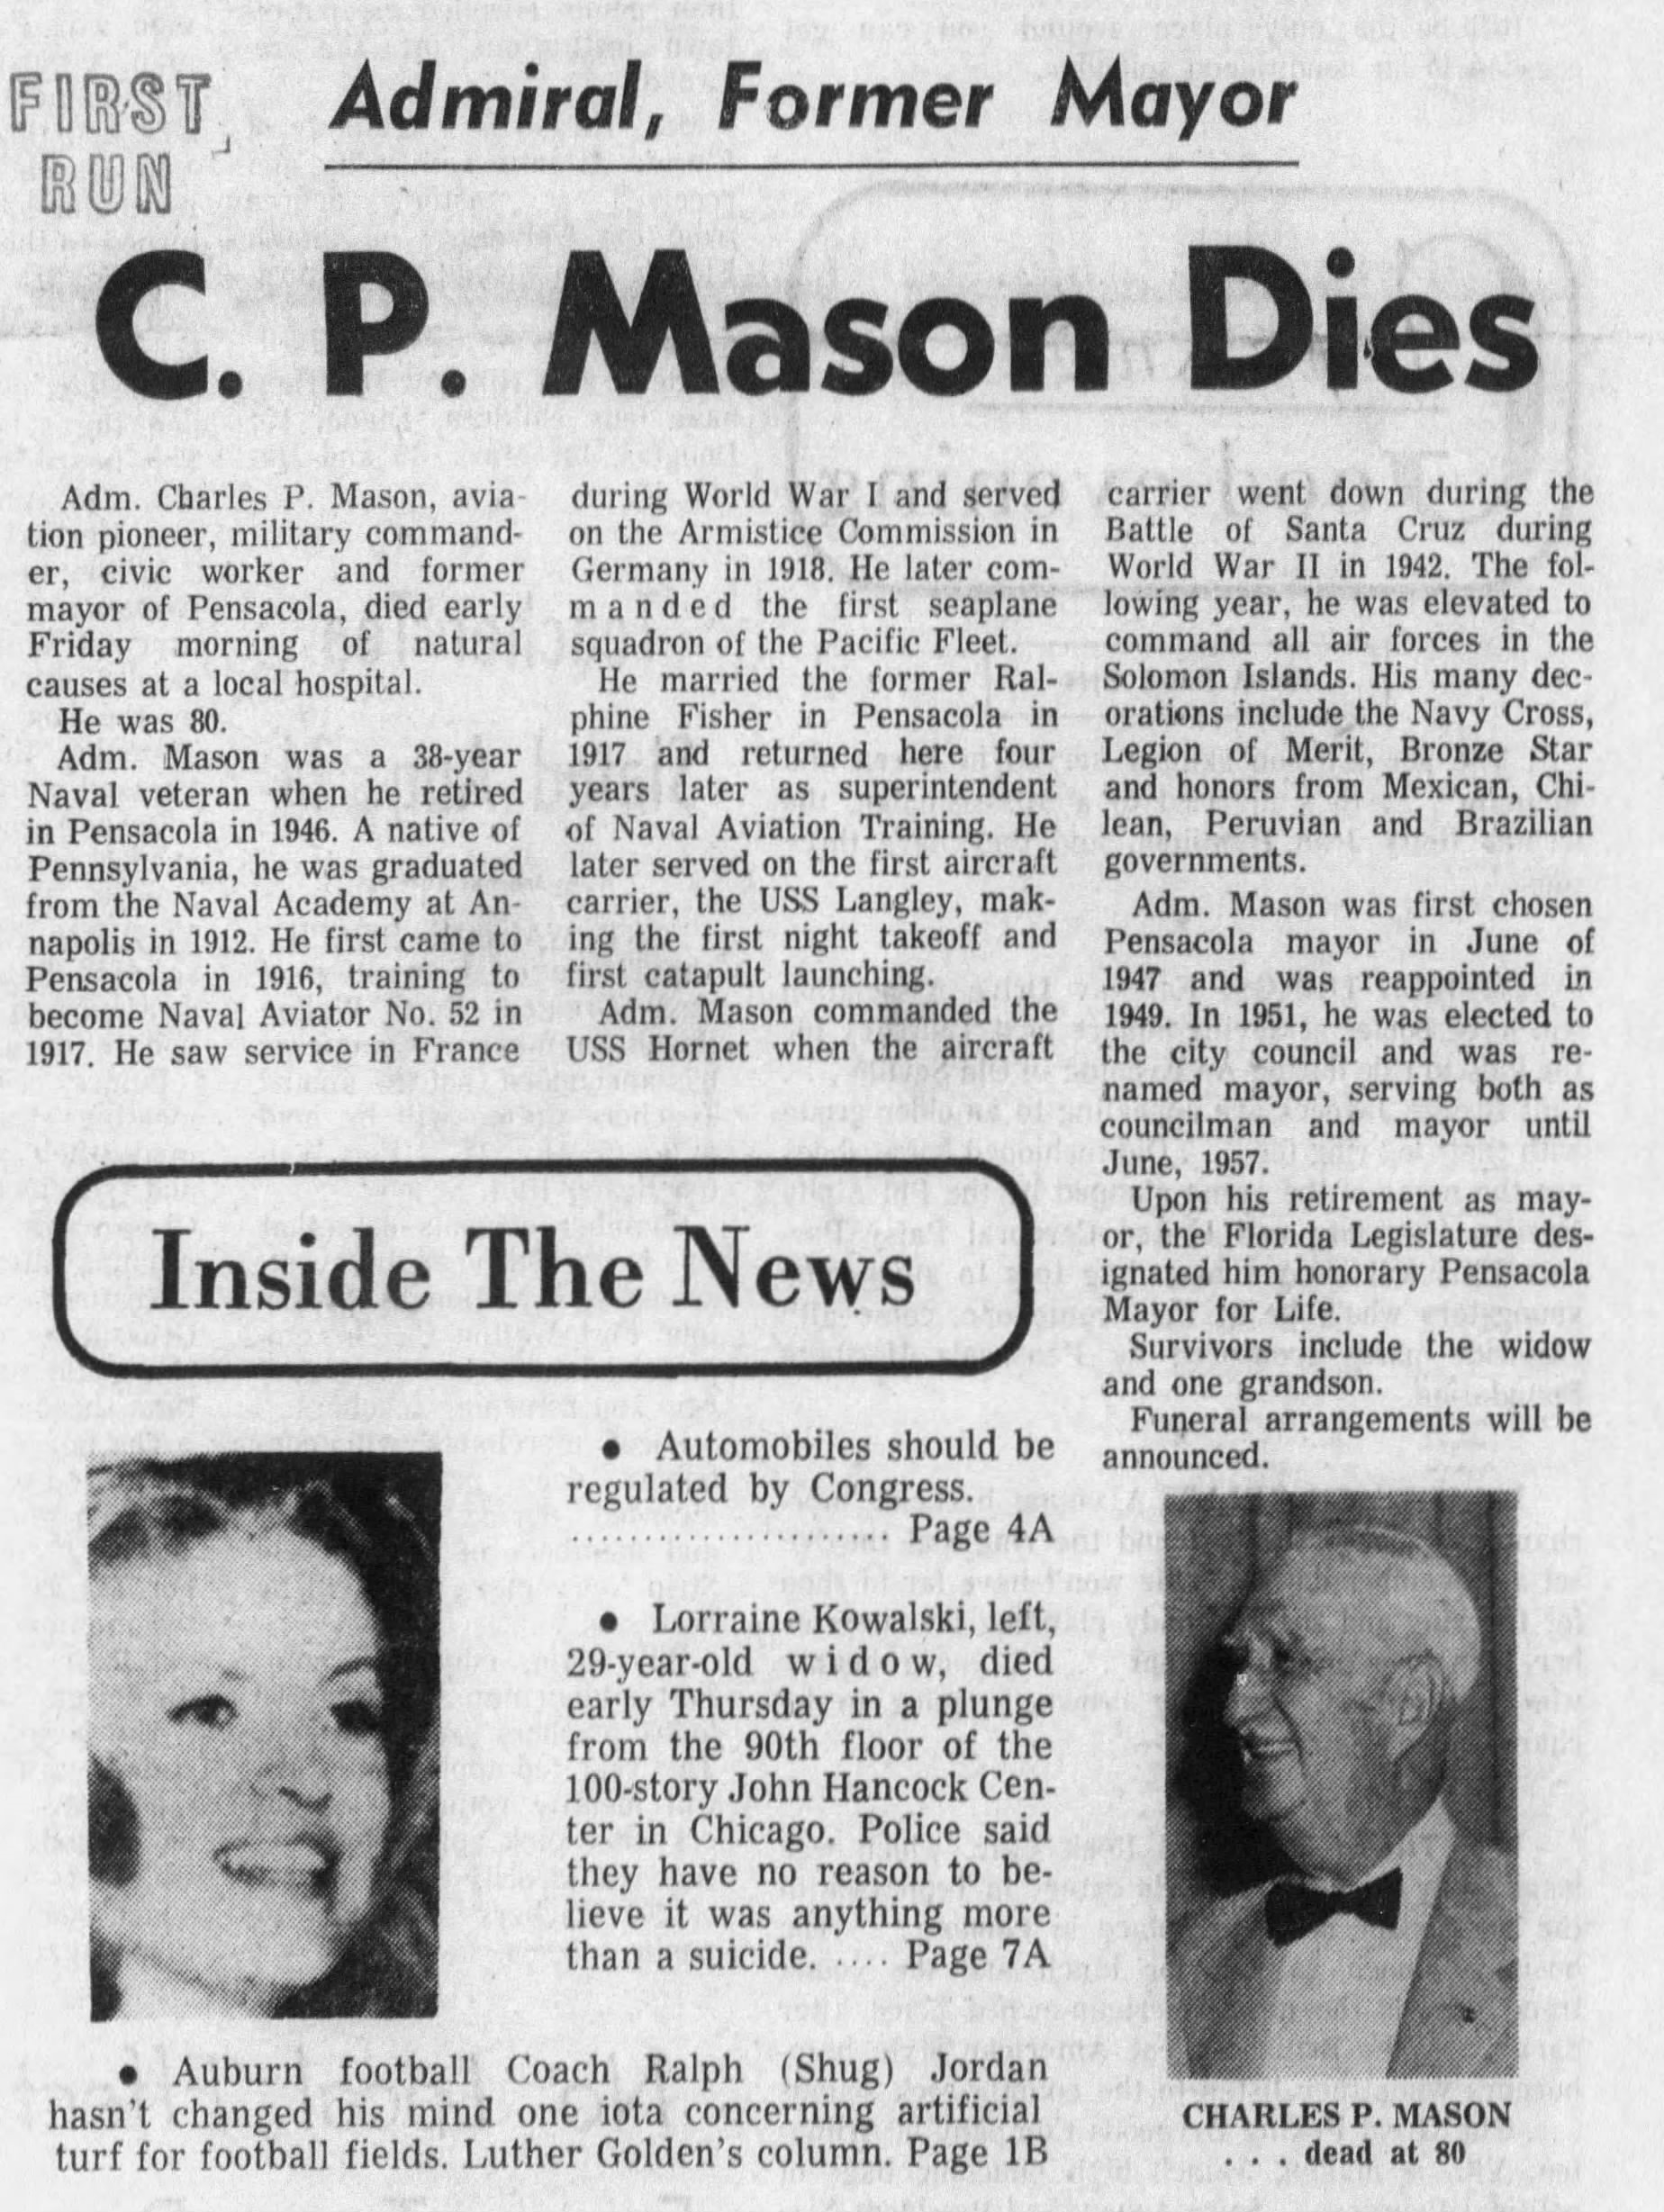 Charles Perry Mason